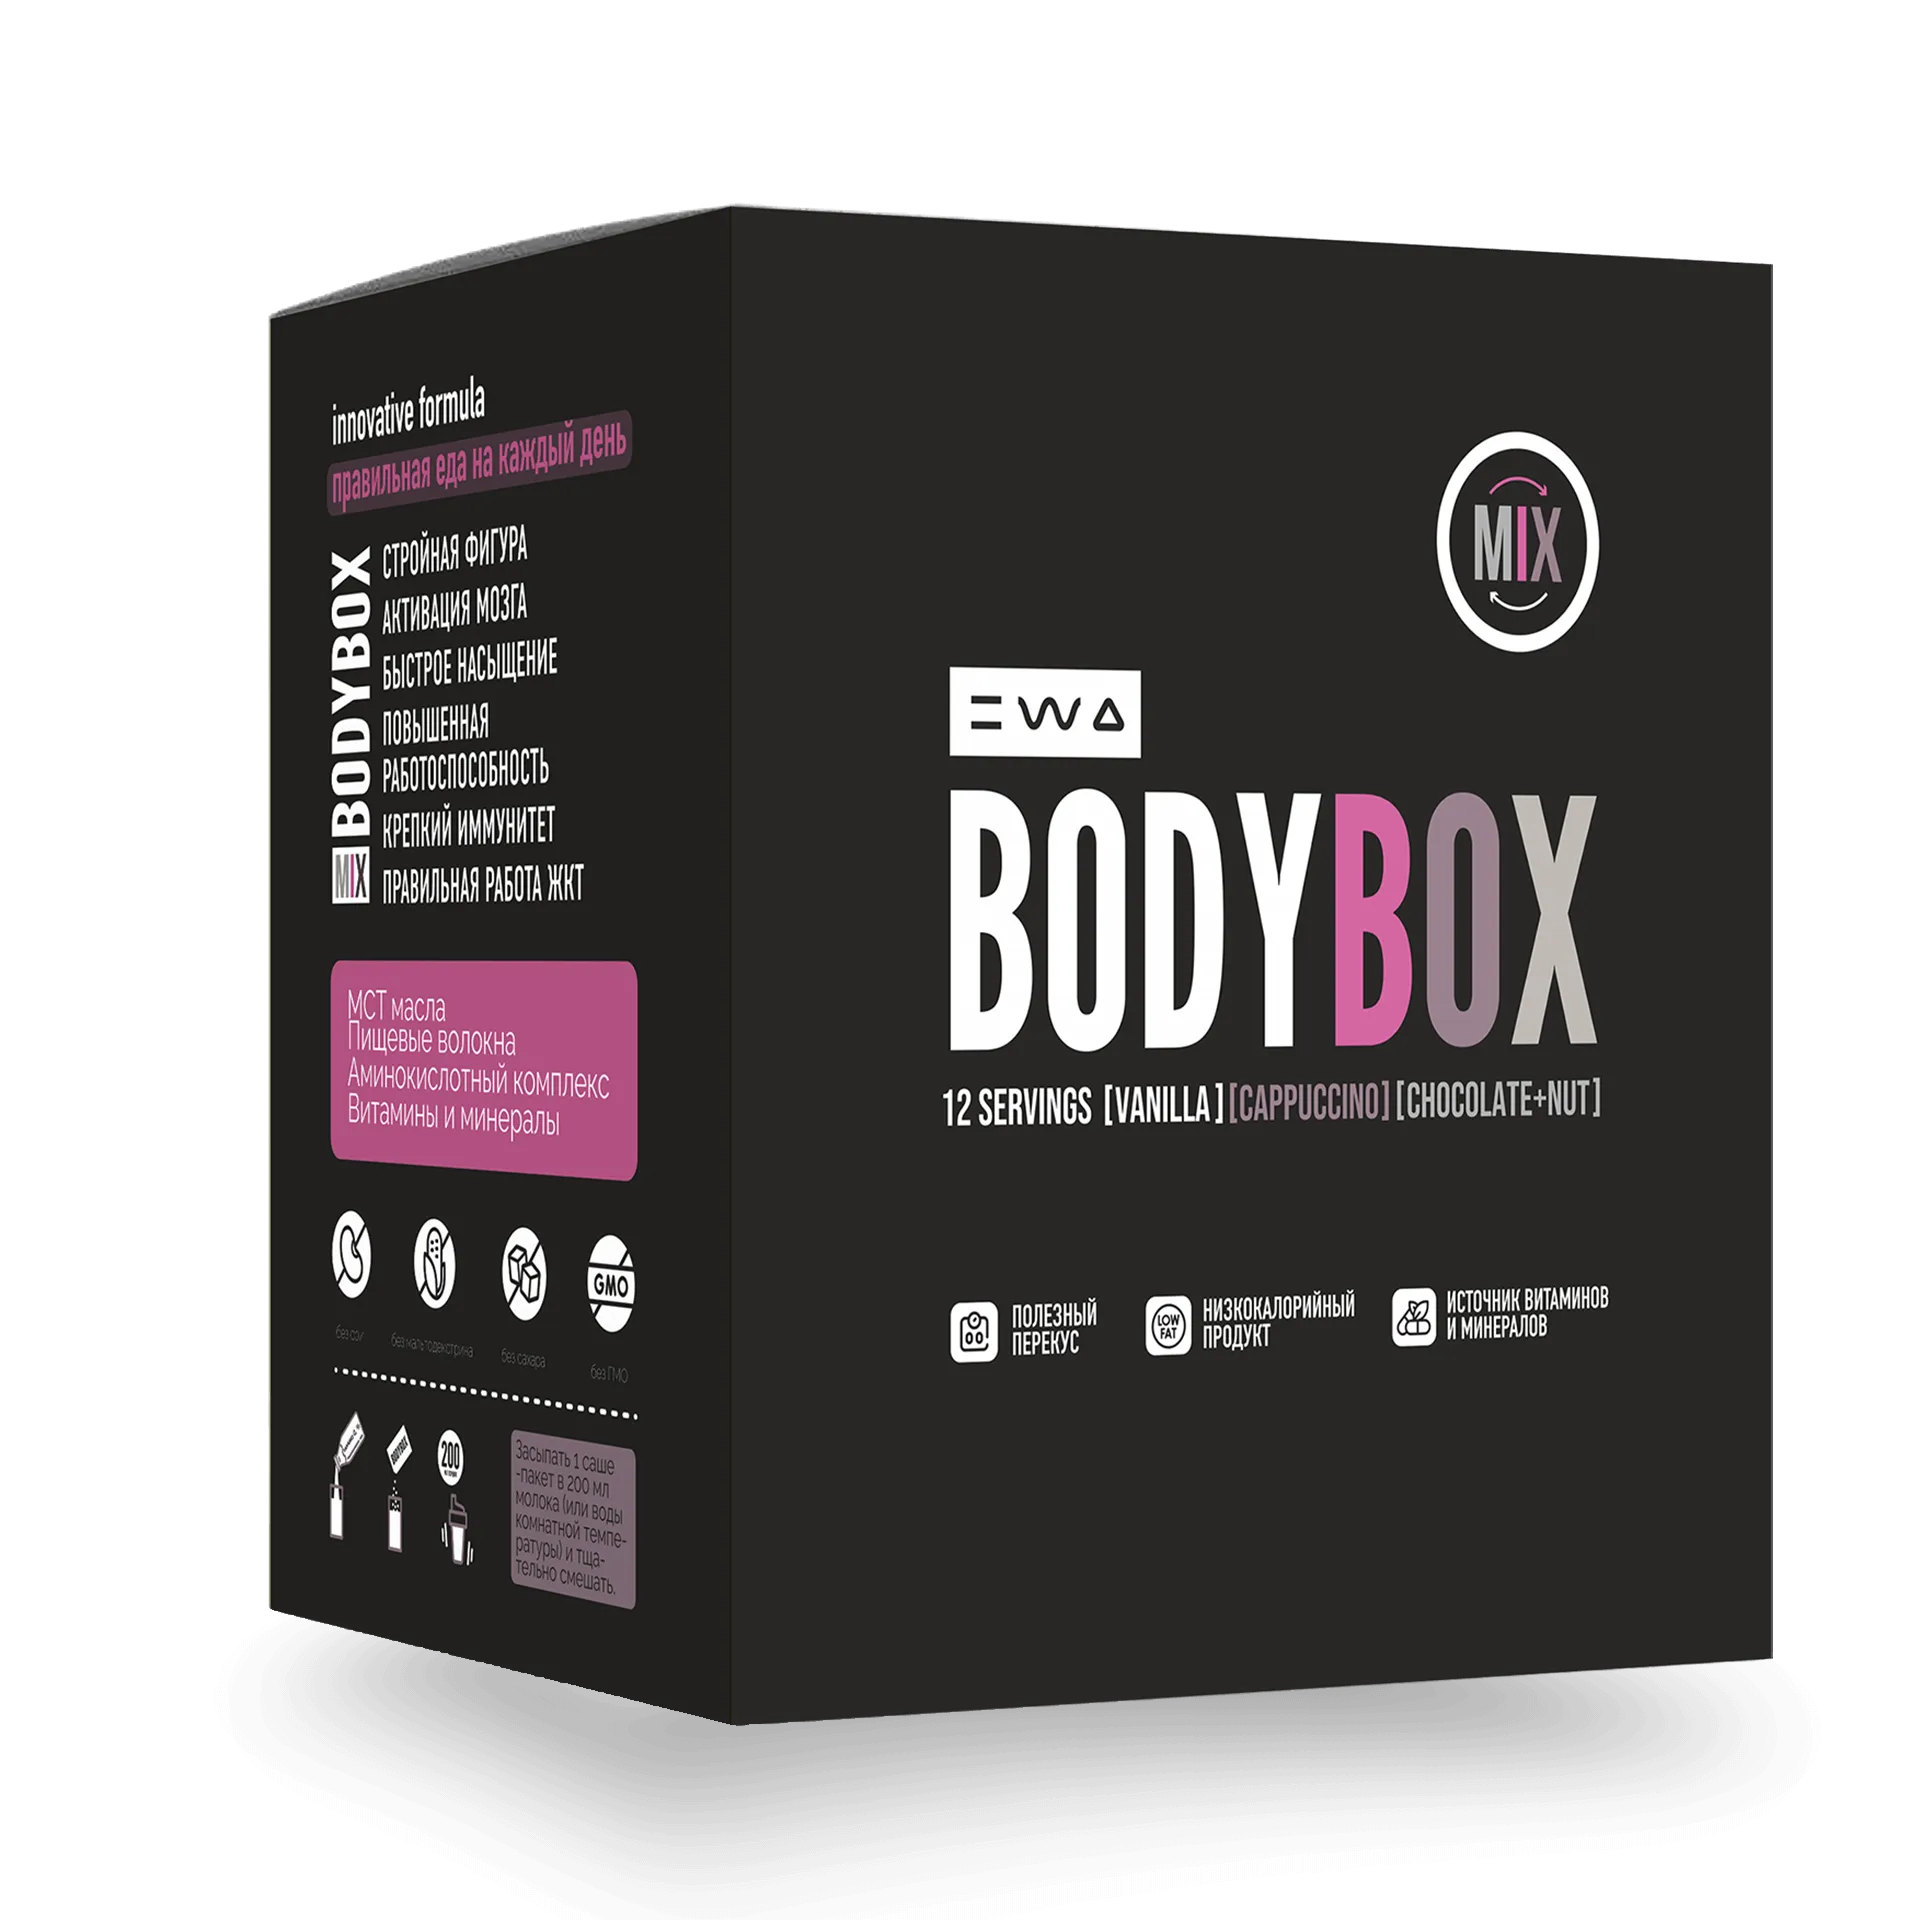 BodyBox Ewa Product